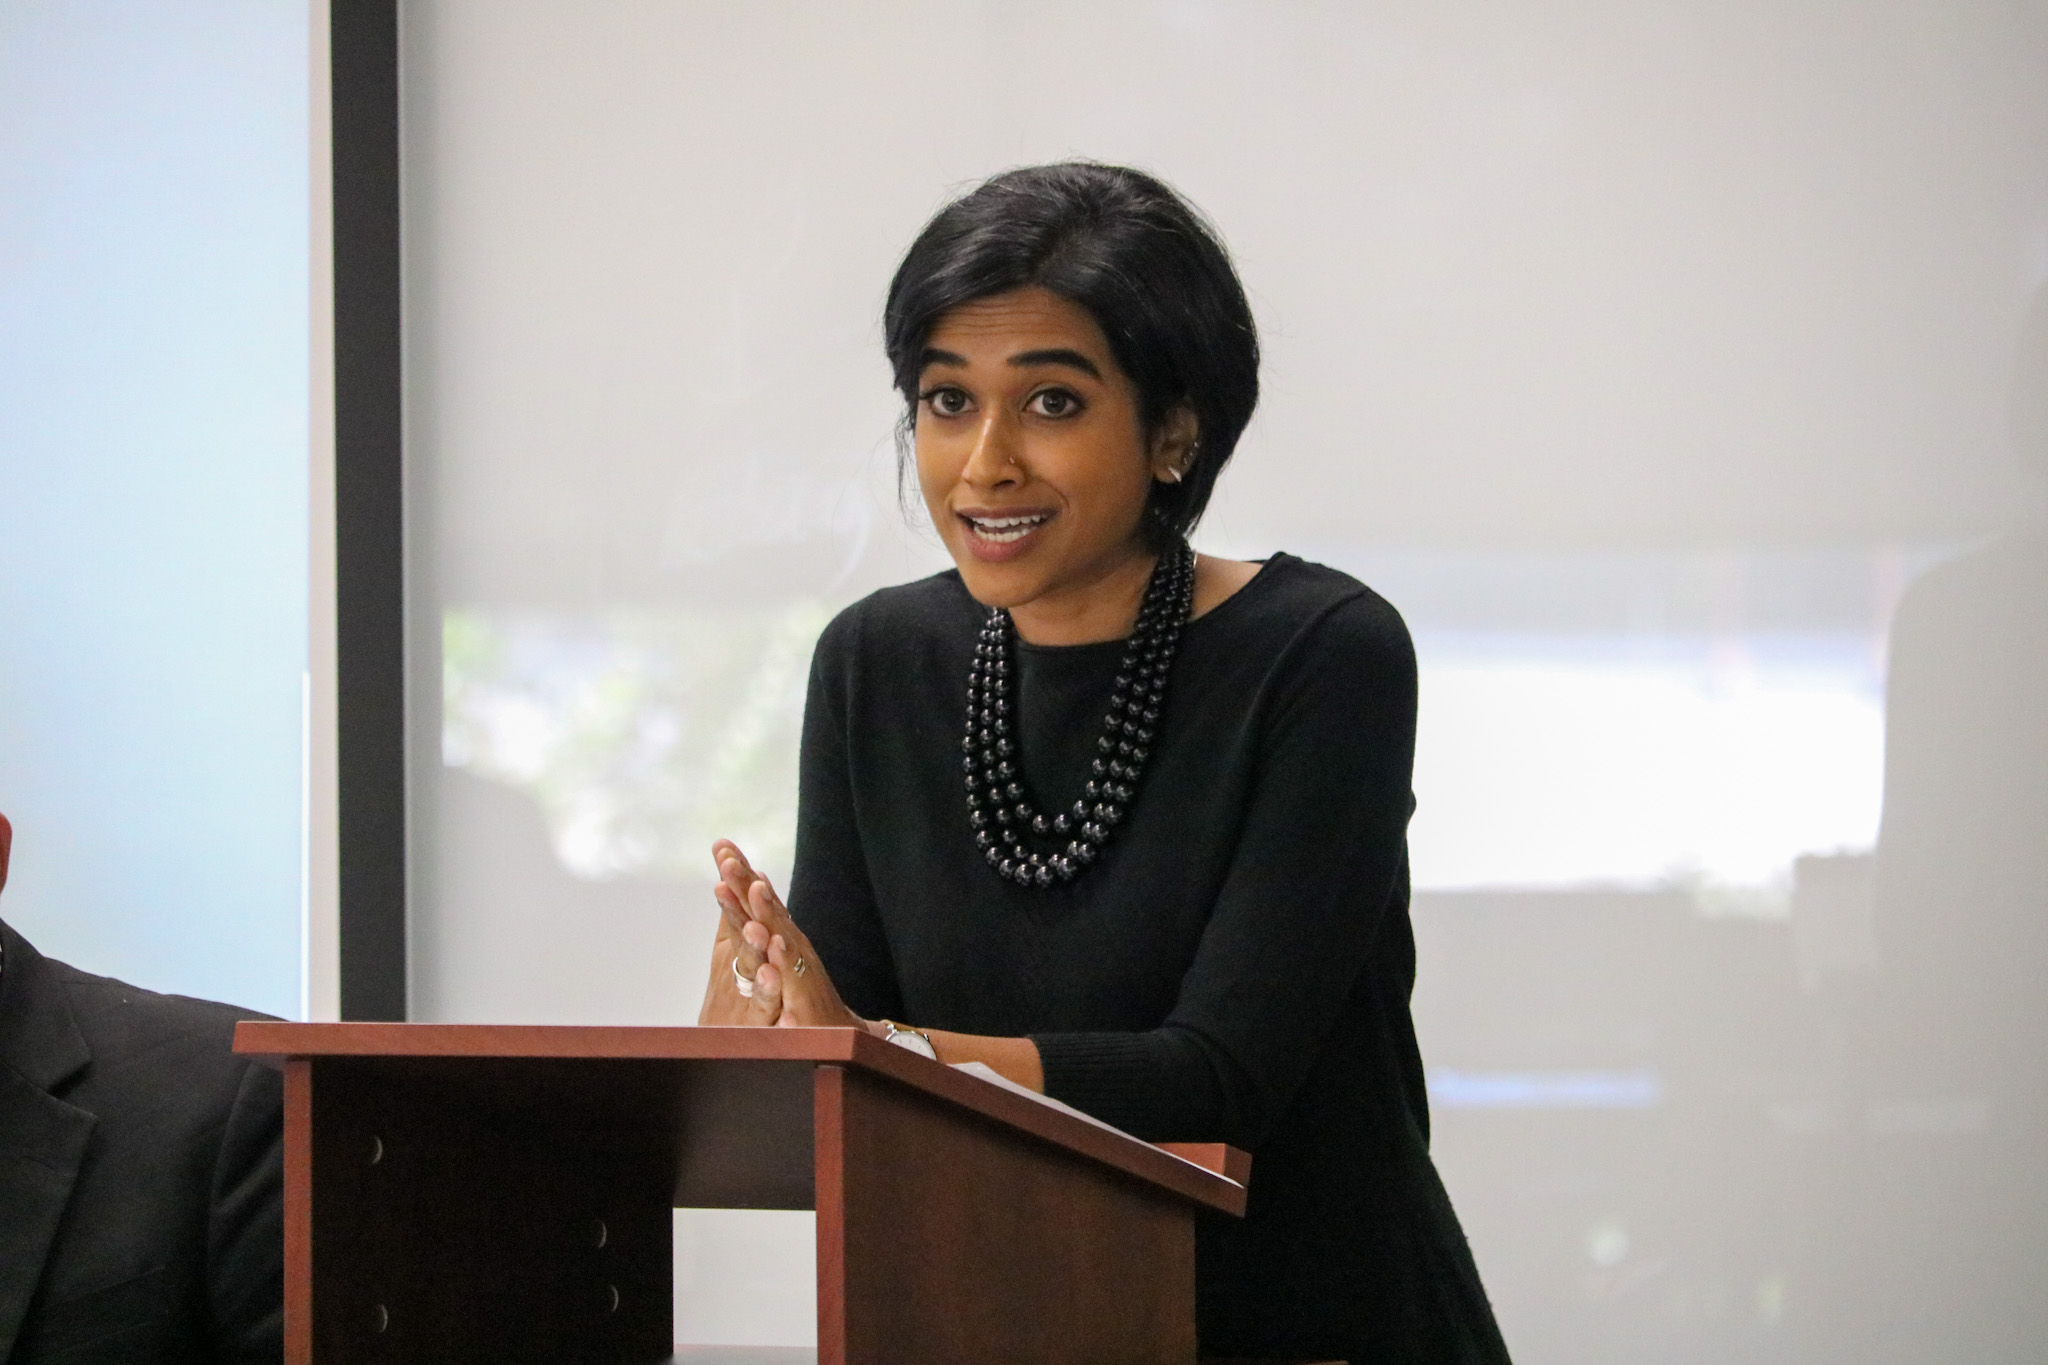 Professor Deepa Das Acevedo presents at the Constitutional Ethnography Symposium at The University of Alabama School of Law